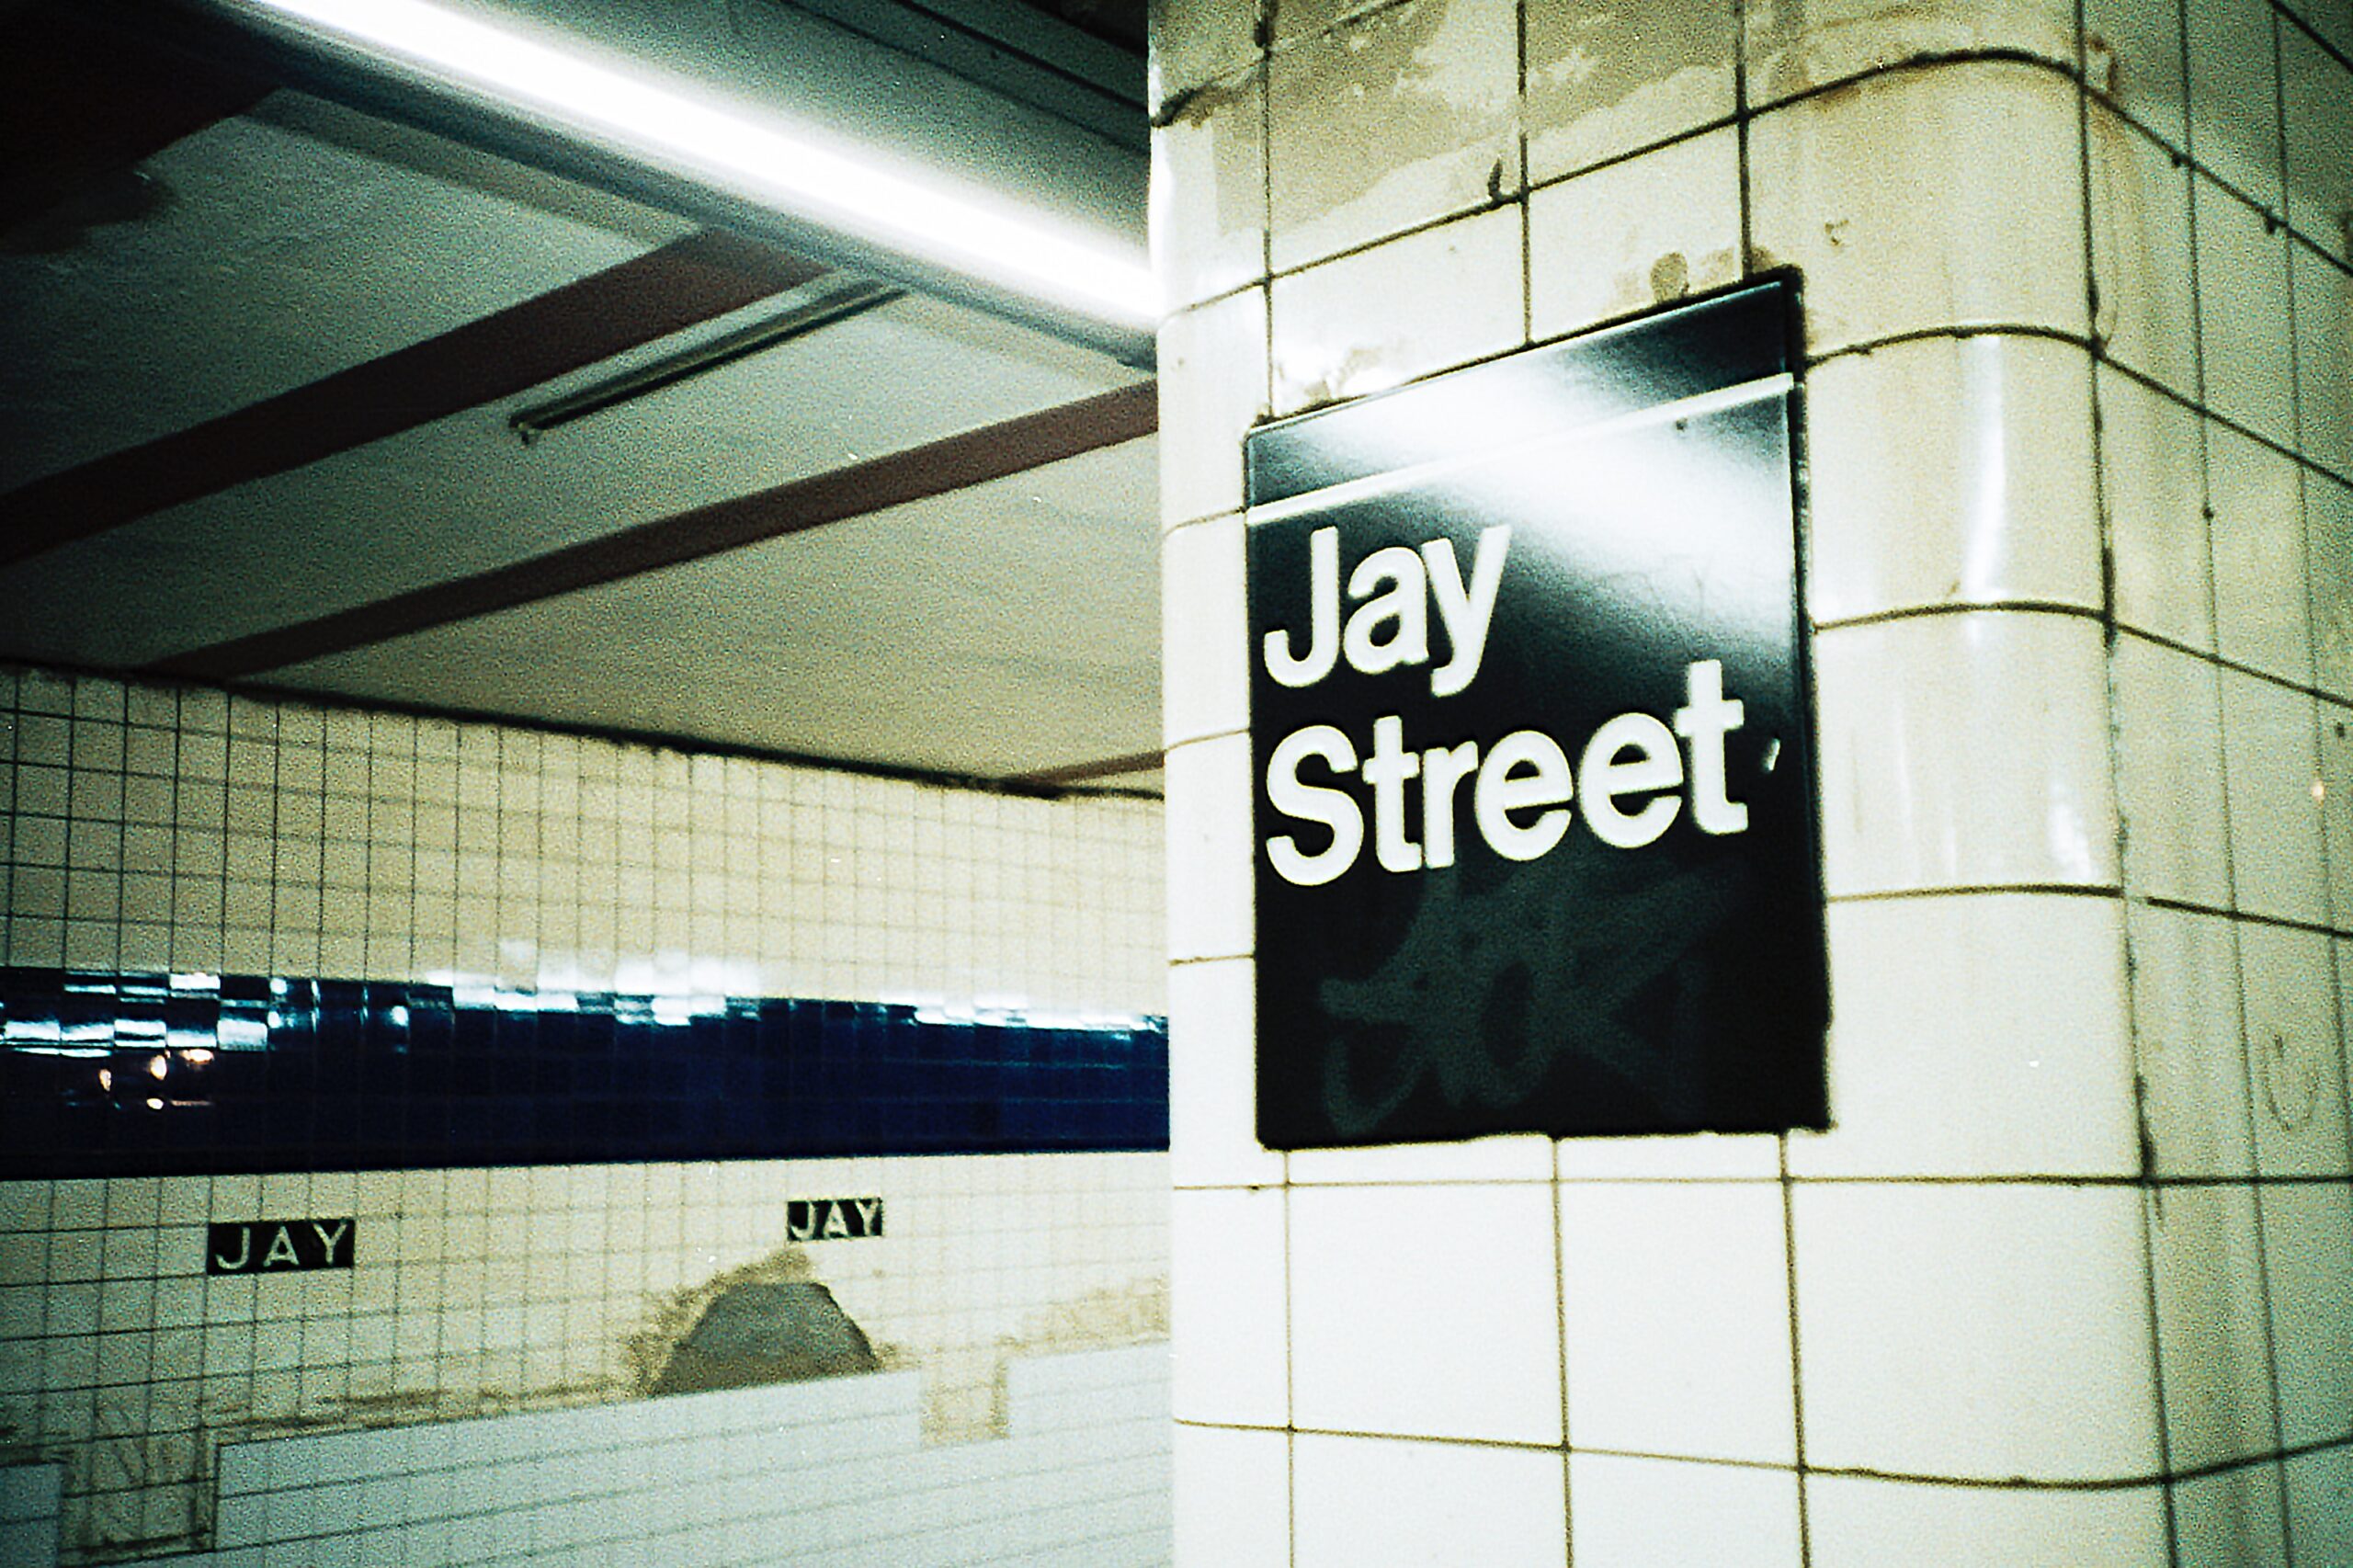 subway tile